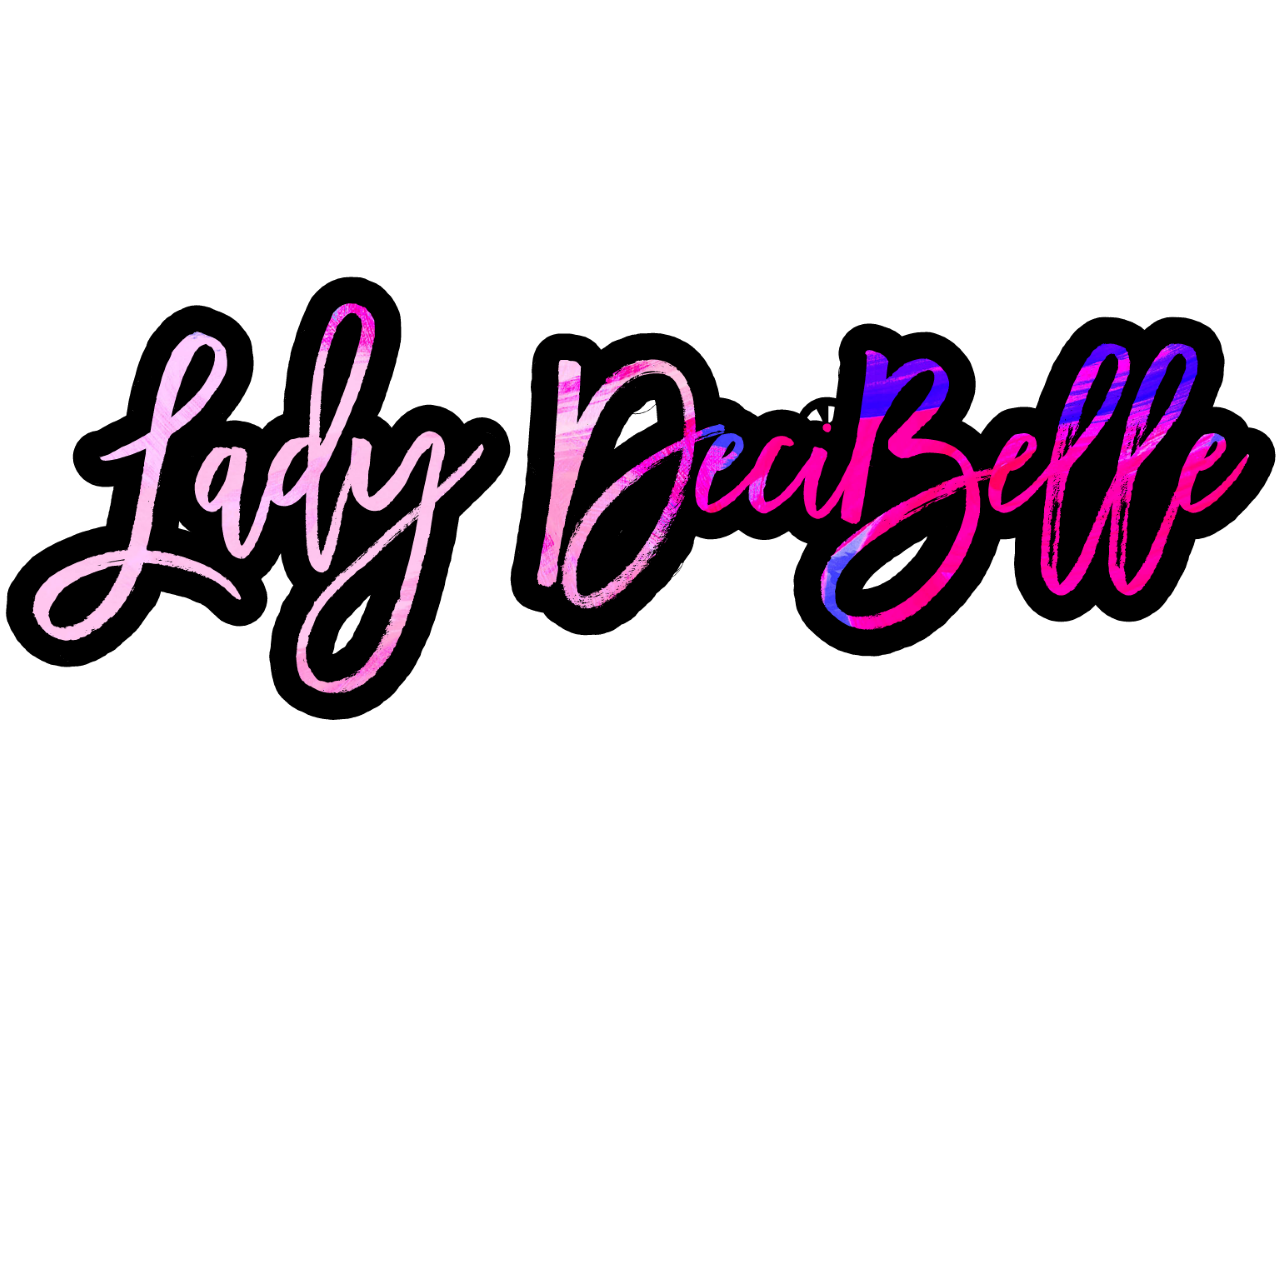 Lady Decibelle's Art and Fashion